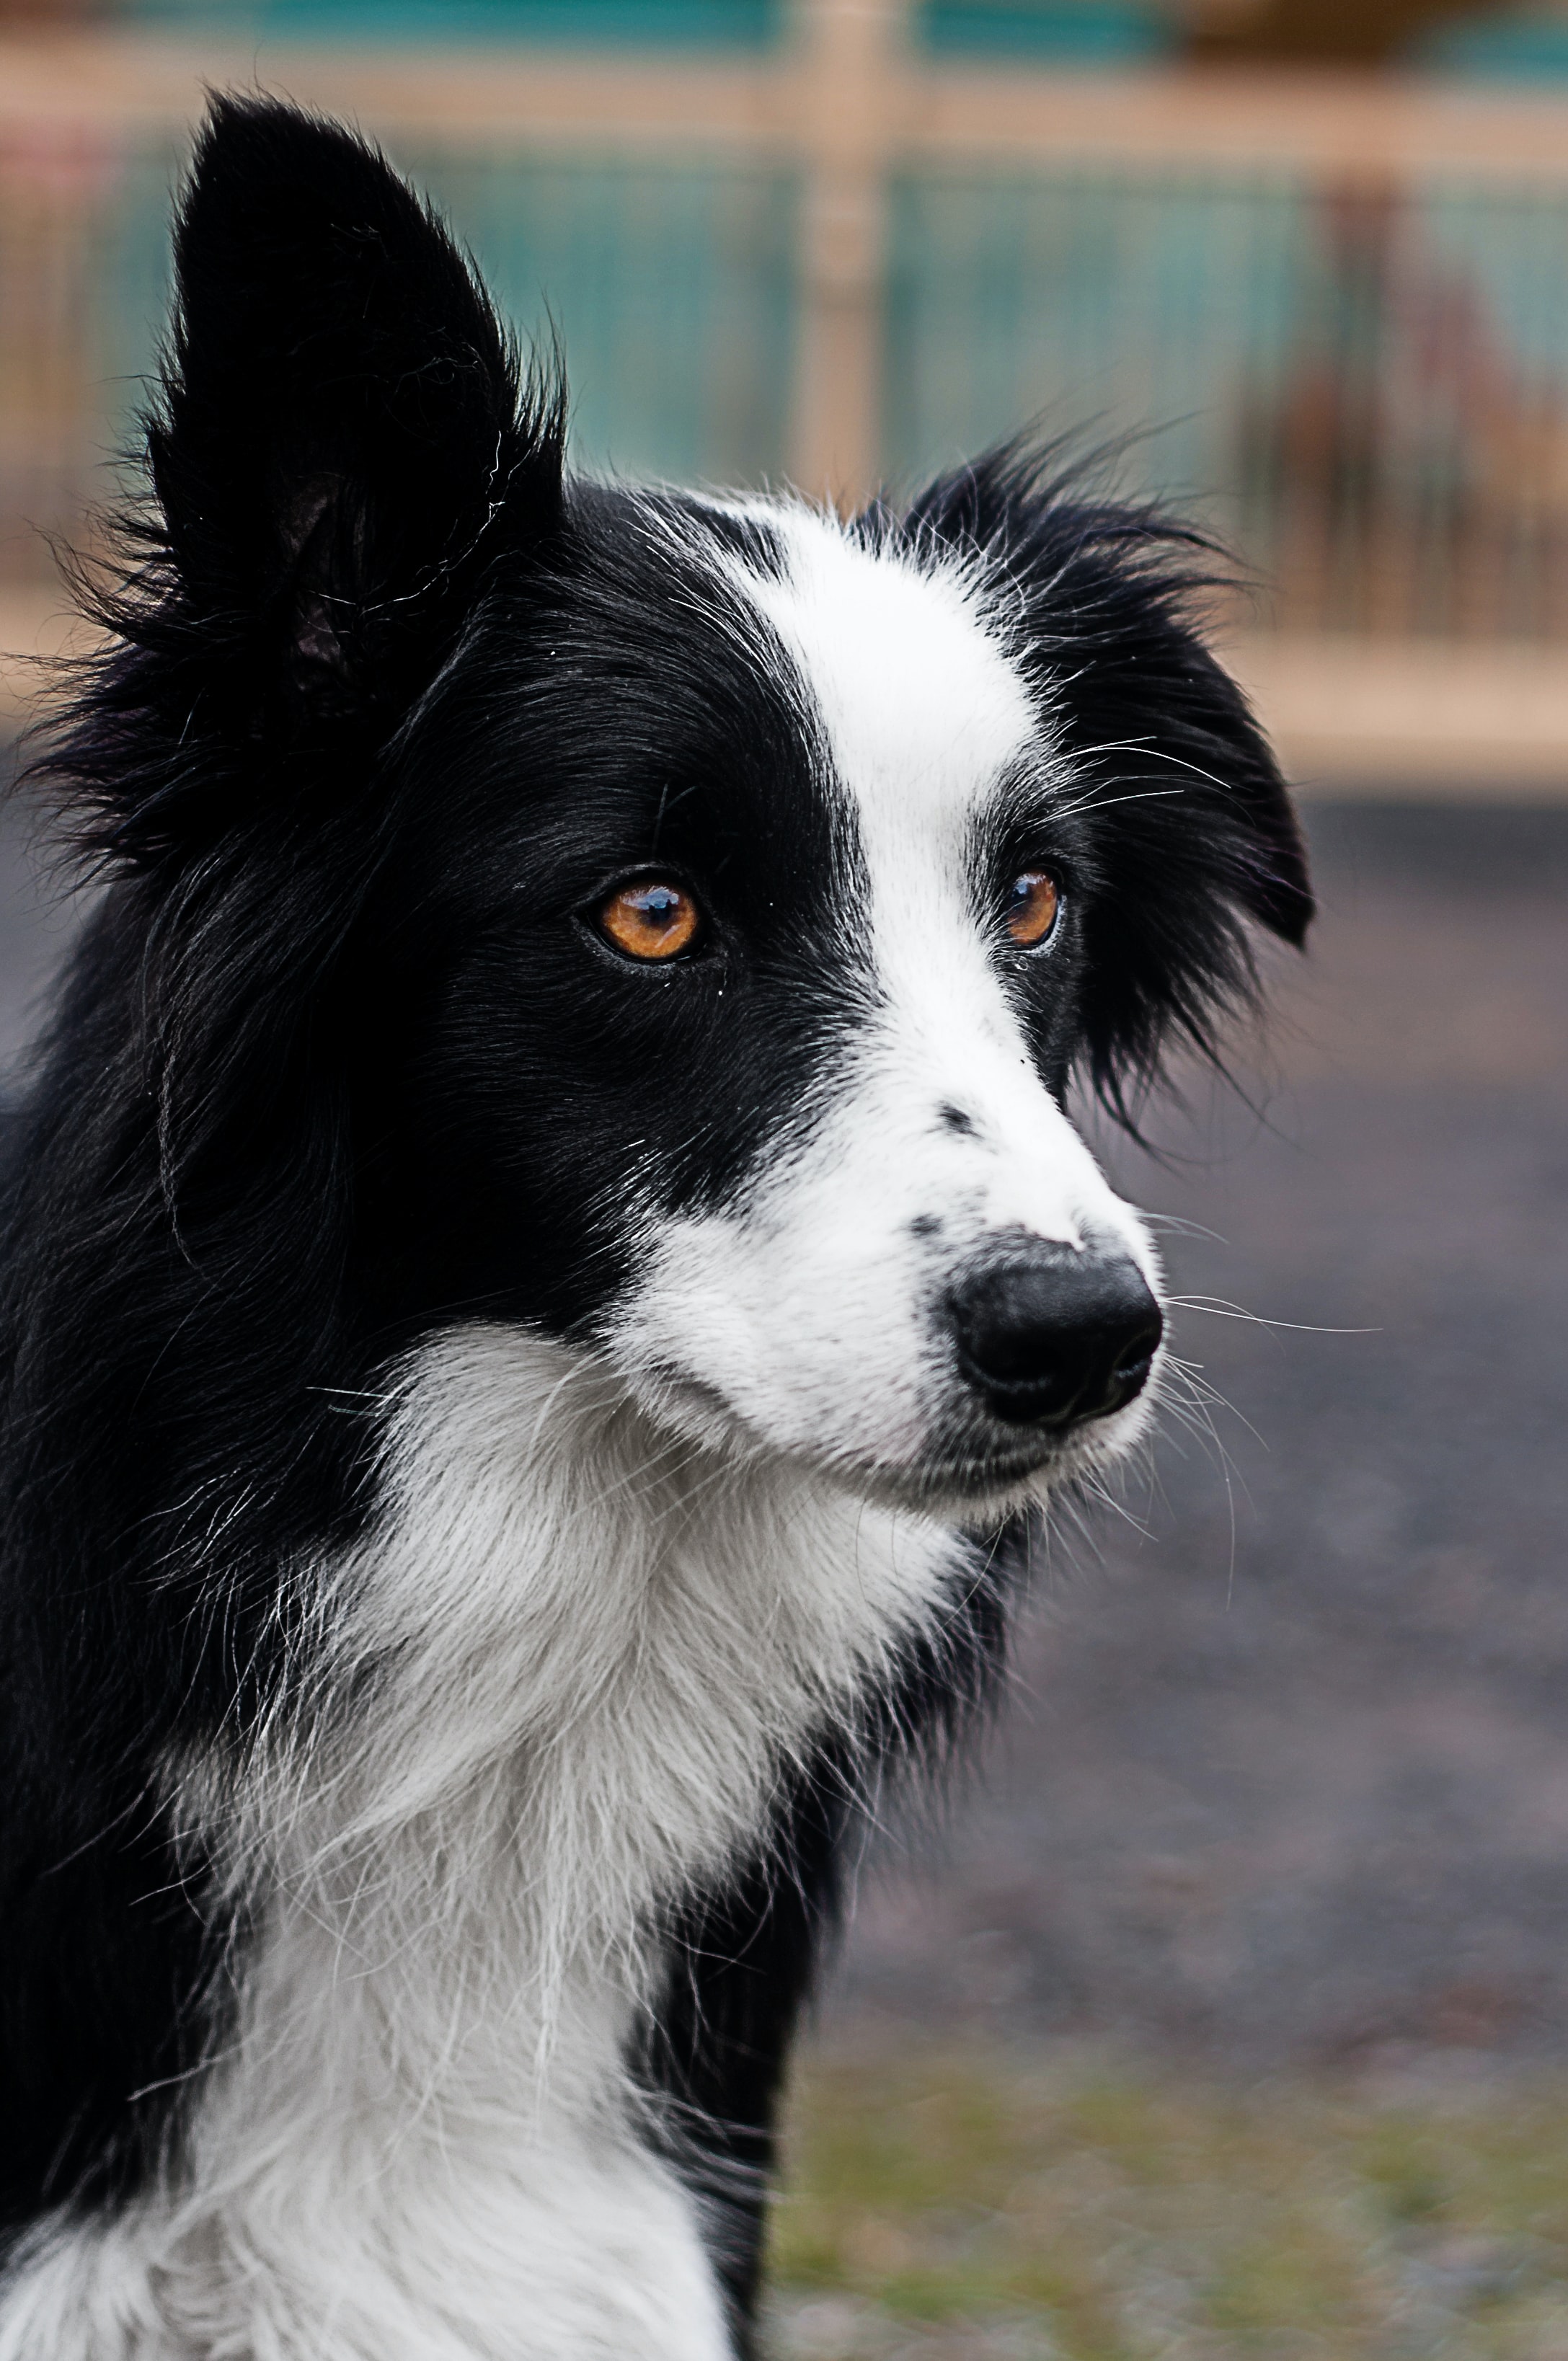 Closeup of black and white dog